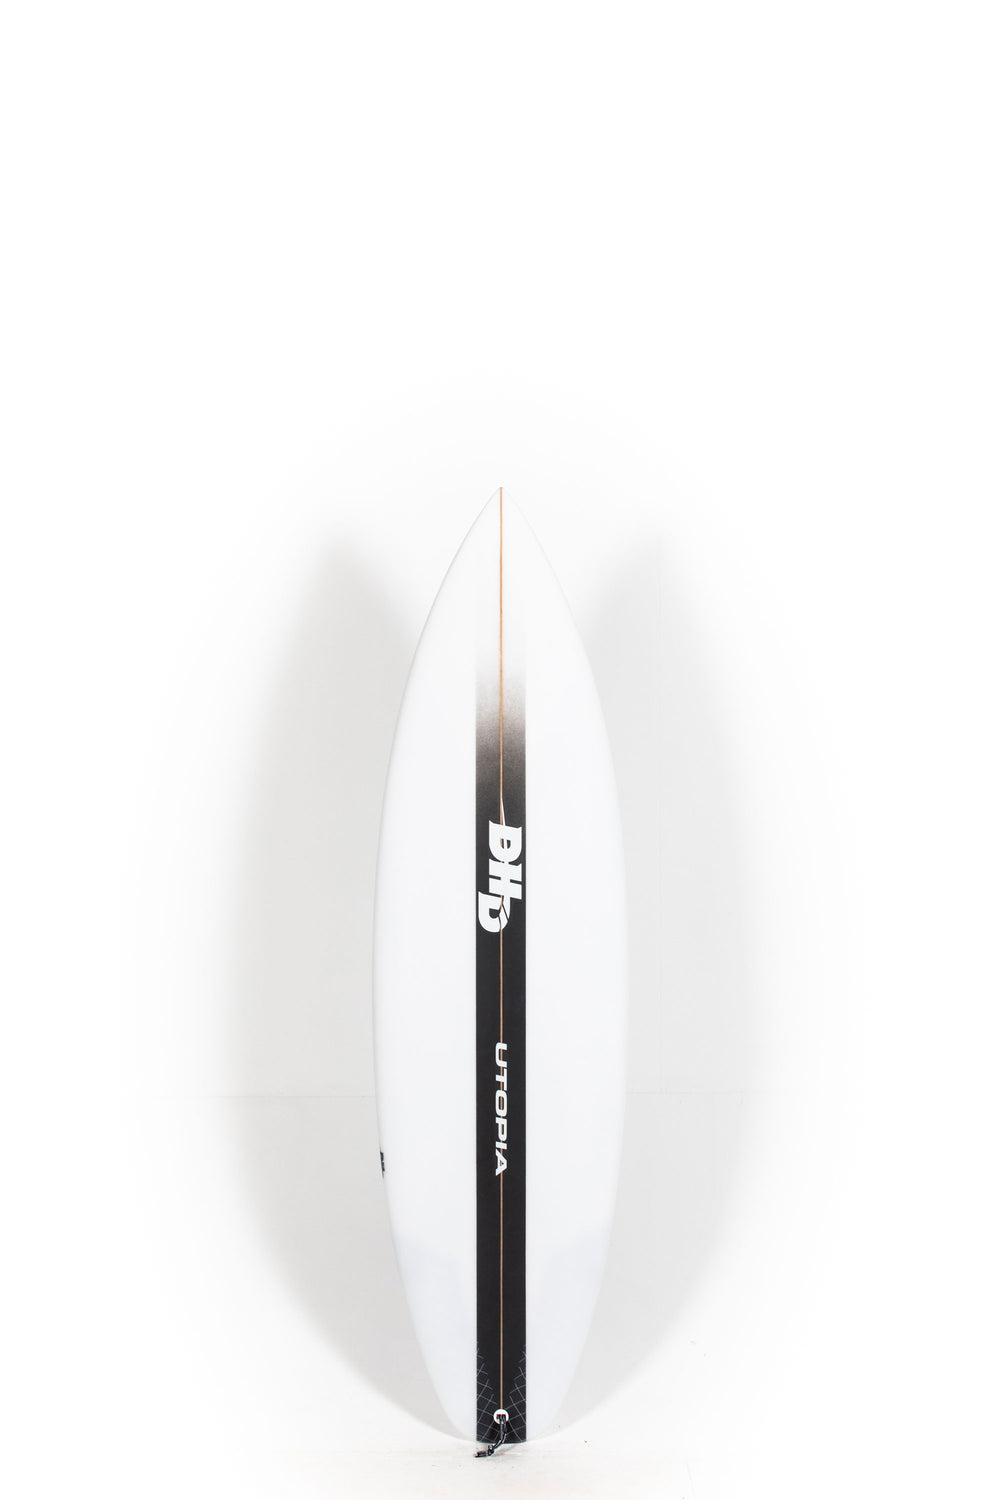 Pukas Surf Shop - DHD - UTOPIA by Darren Handley - 5'10